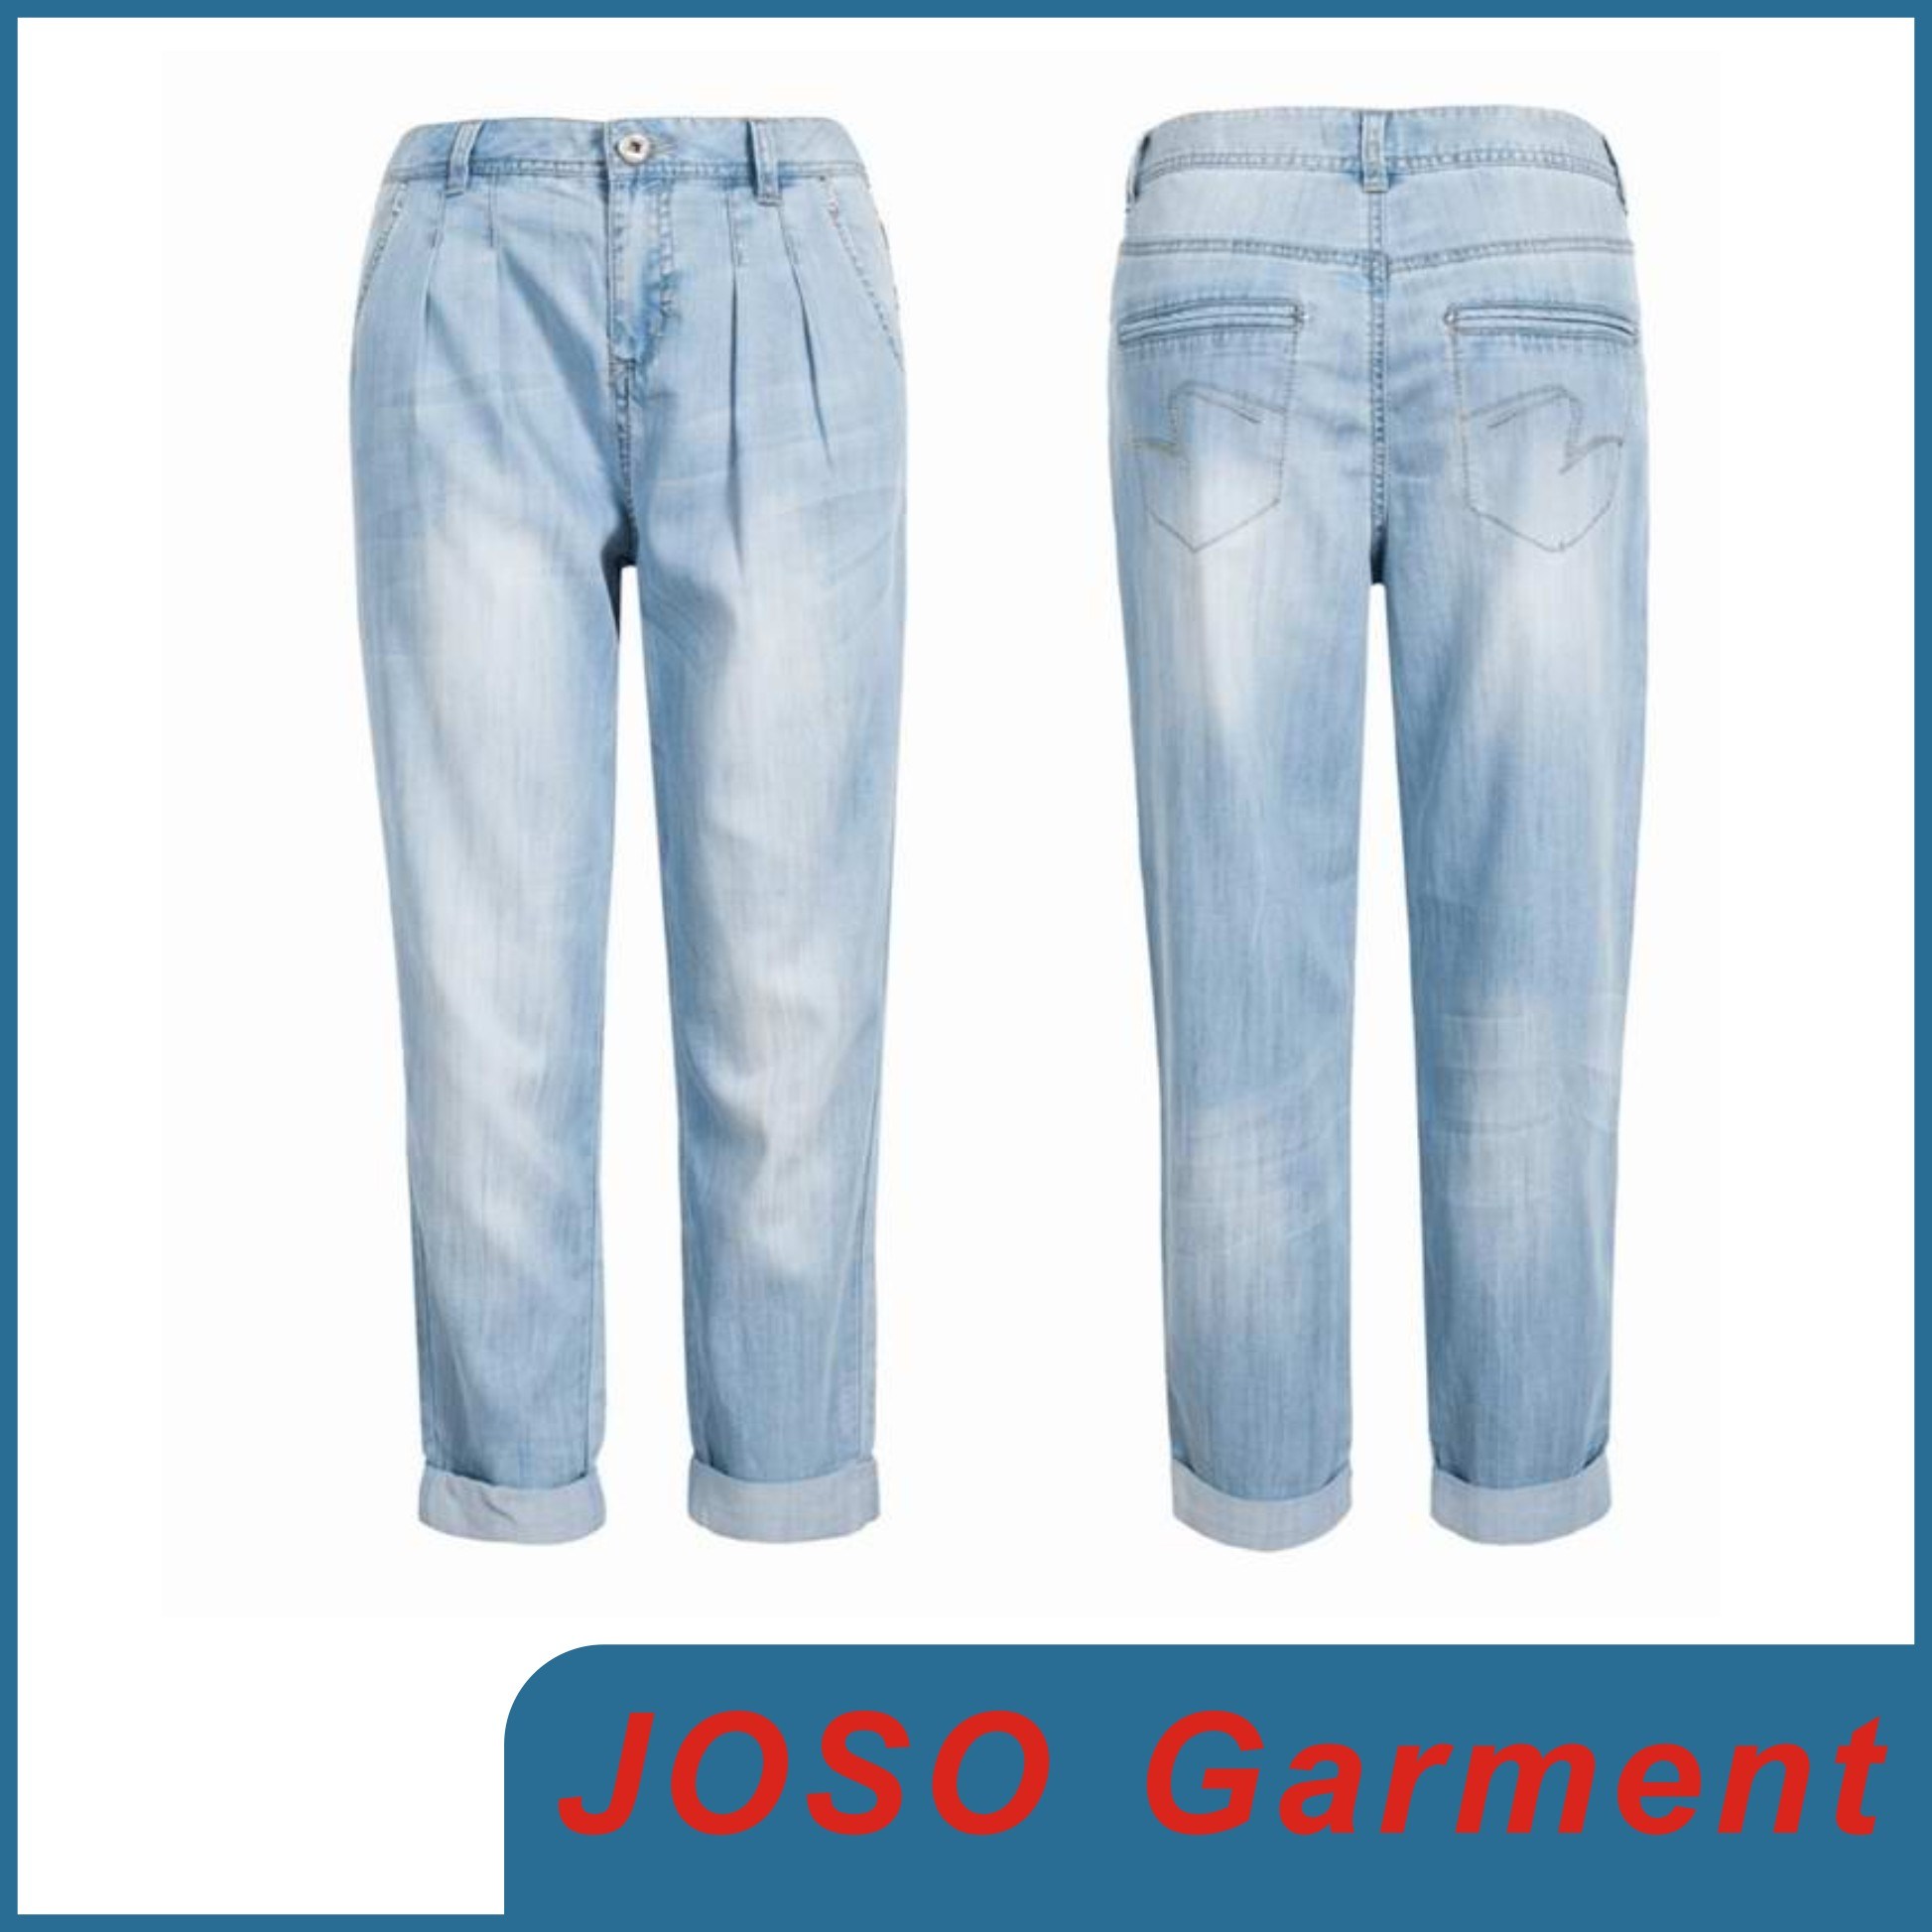 Ladies Fashion Denim Pants (JC1078)